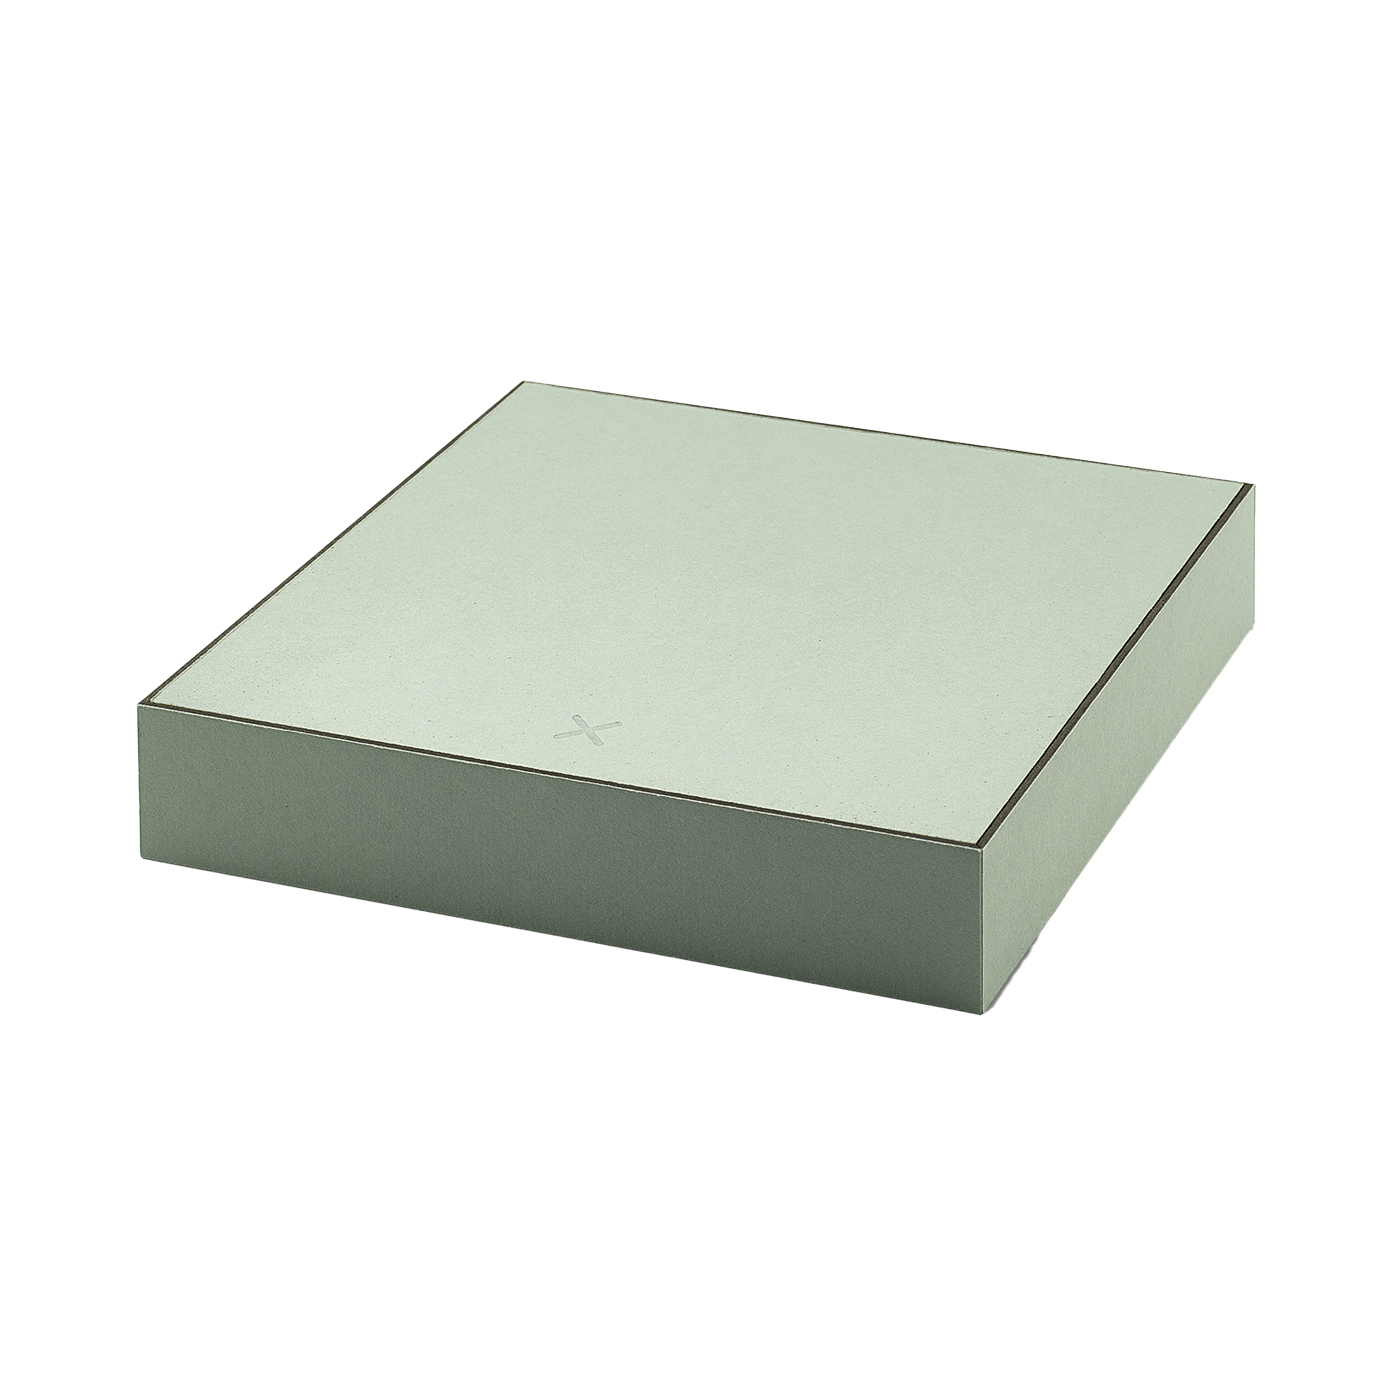 PICA-Design Schmucketui "Flipbox", graugrün, 167 x 167 x 30 mm - 1 Stück